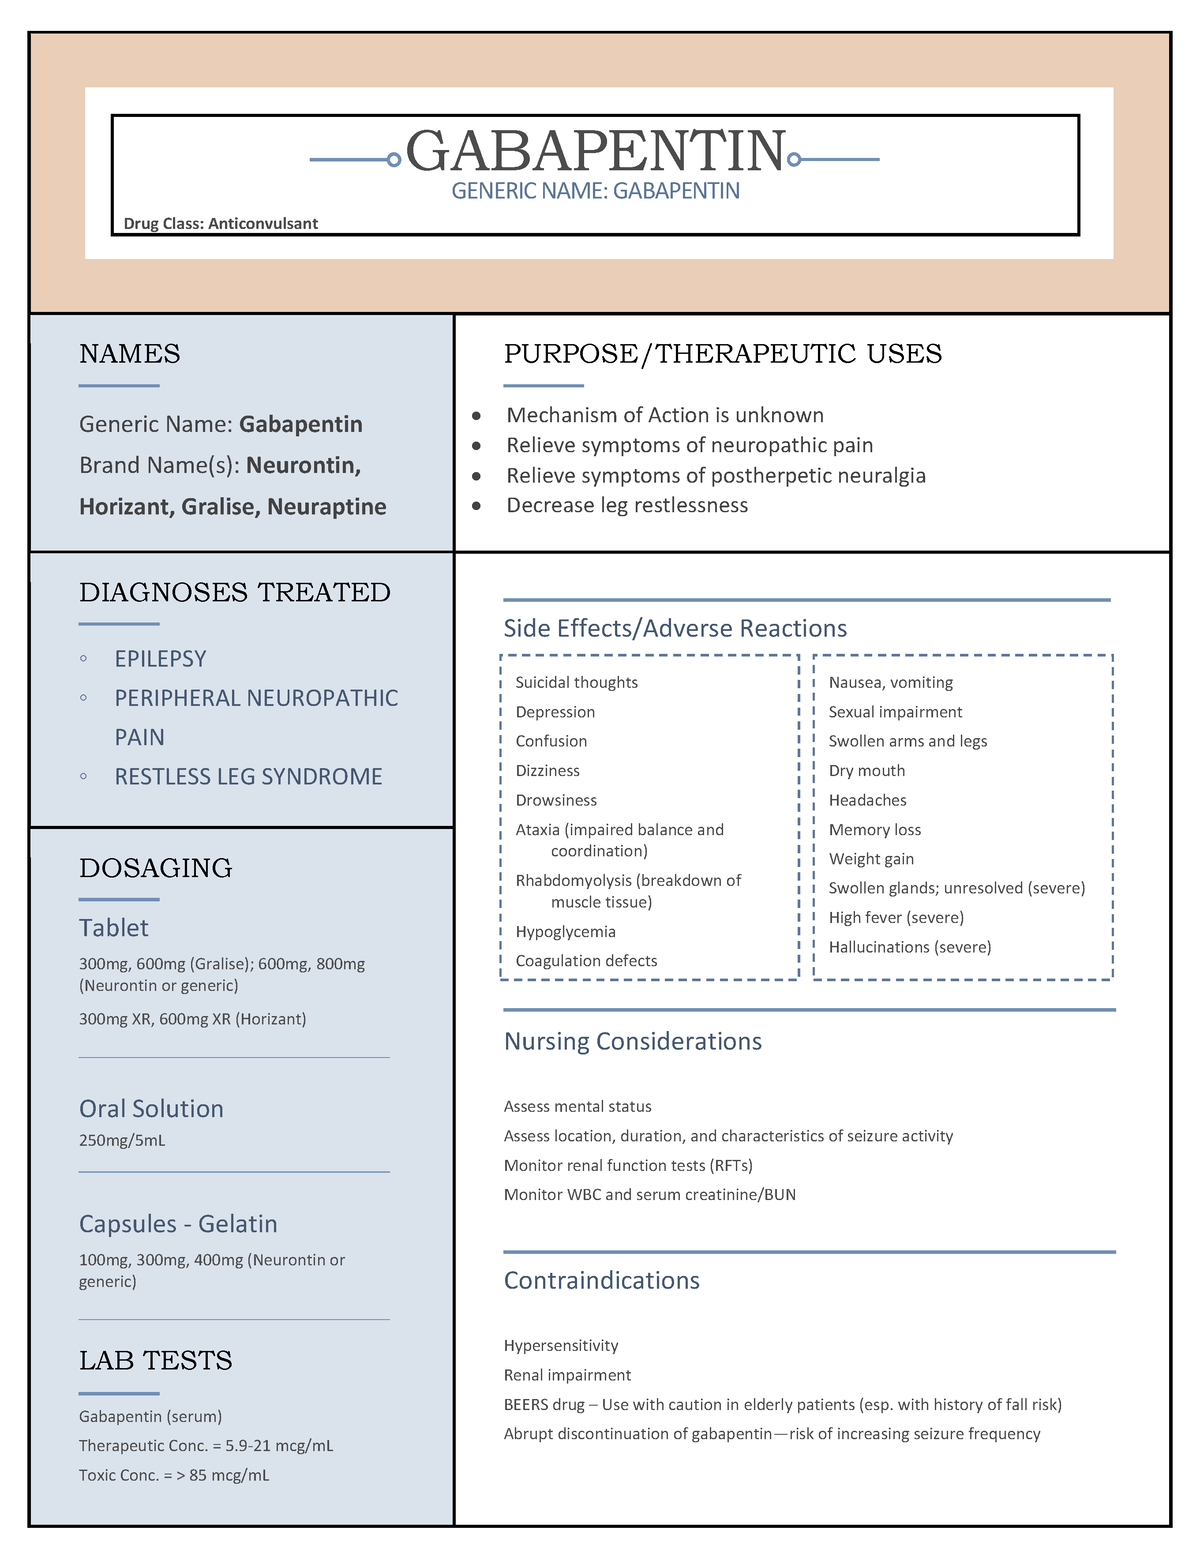 Gabapentin Medication Sheet/Overview GABAPENTIN GENERIC NAME